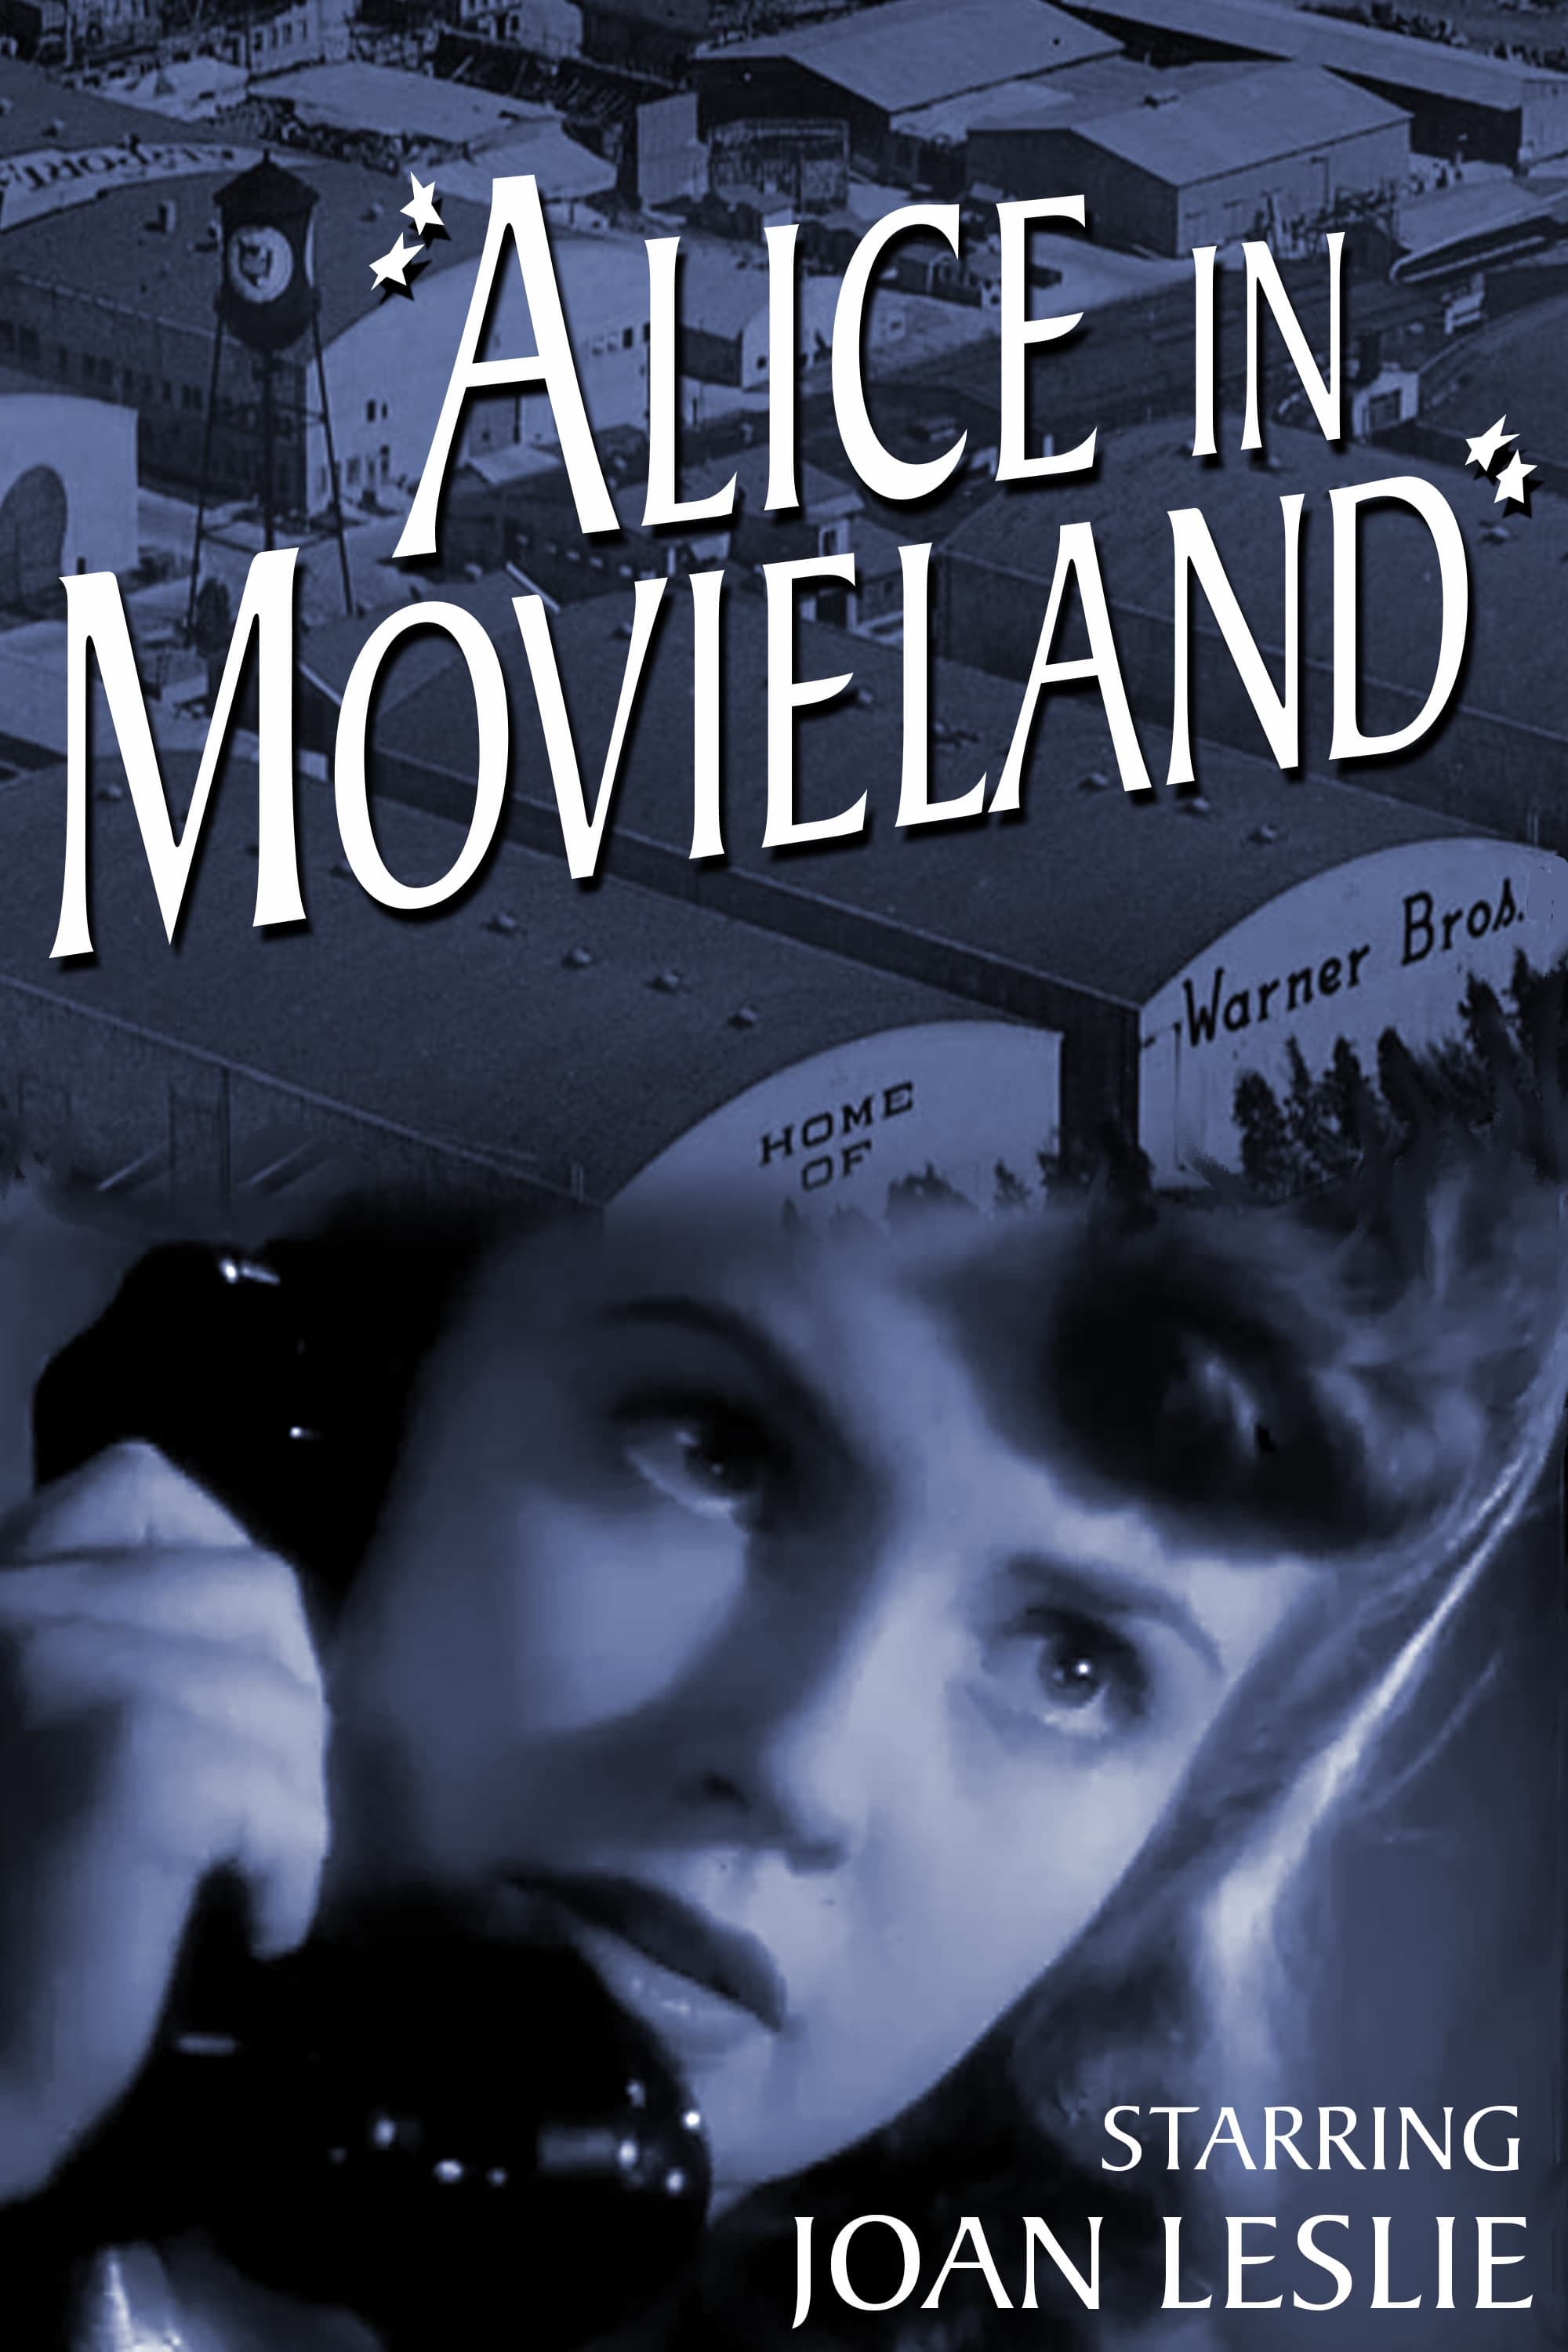 Alice in Movieland (1940)